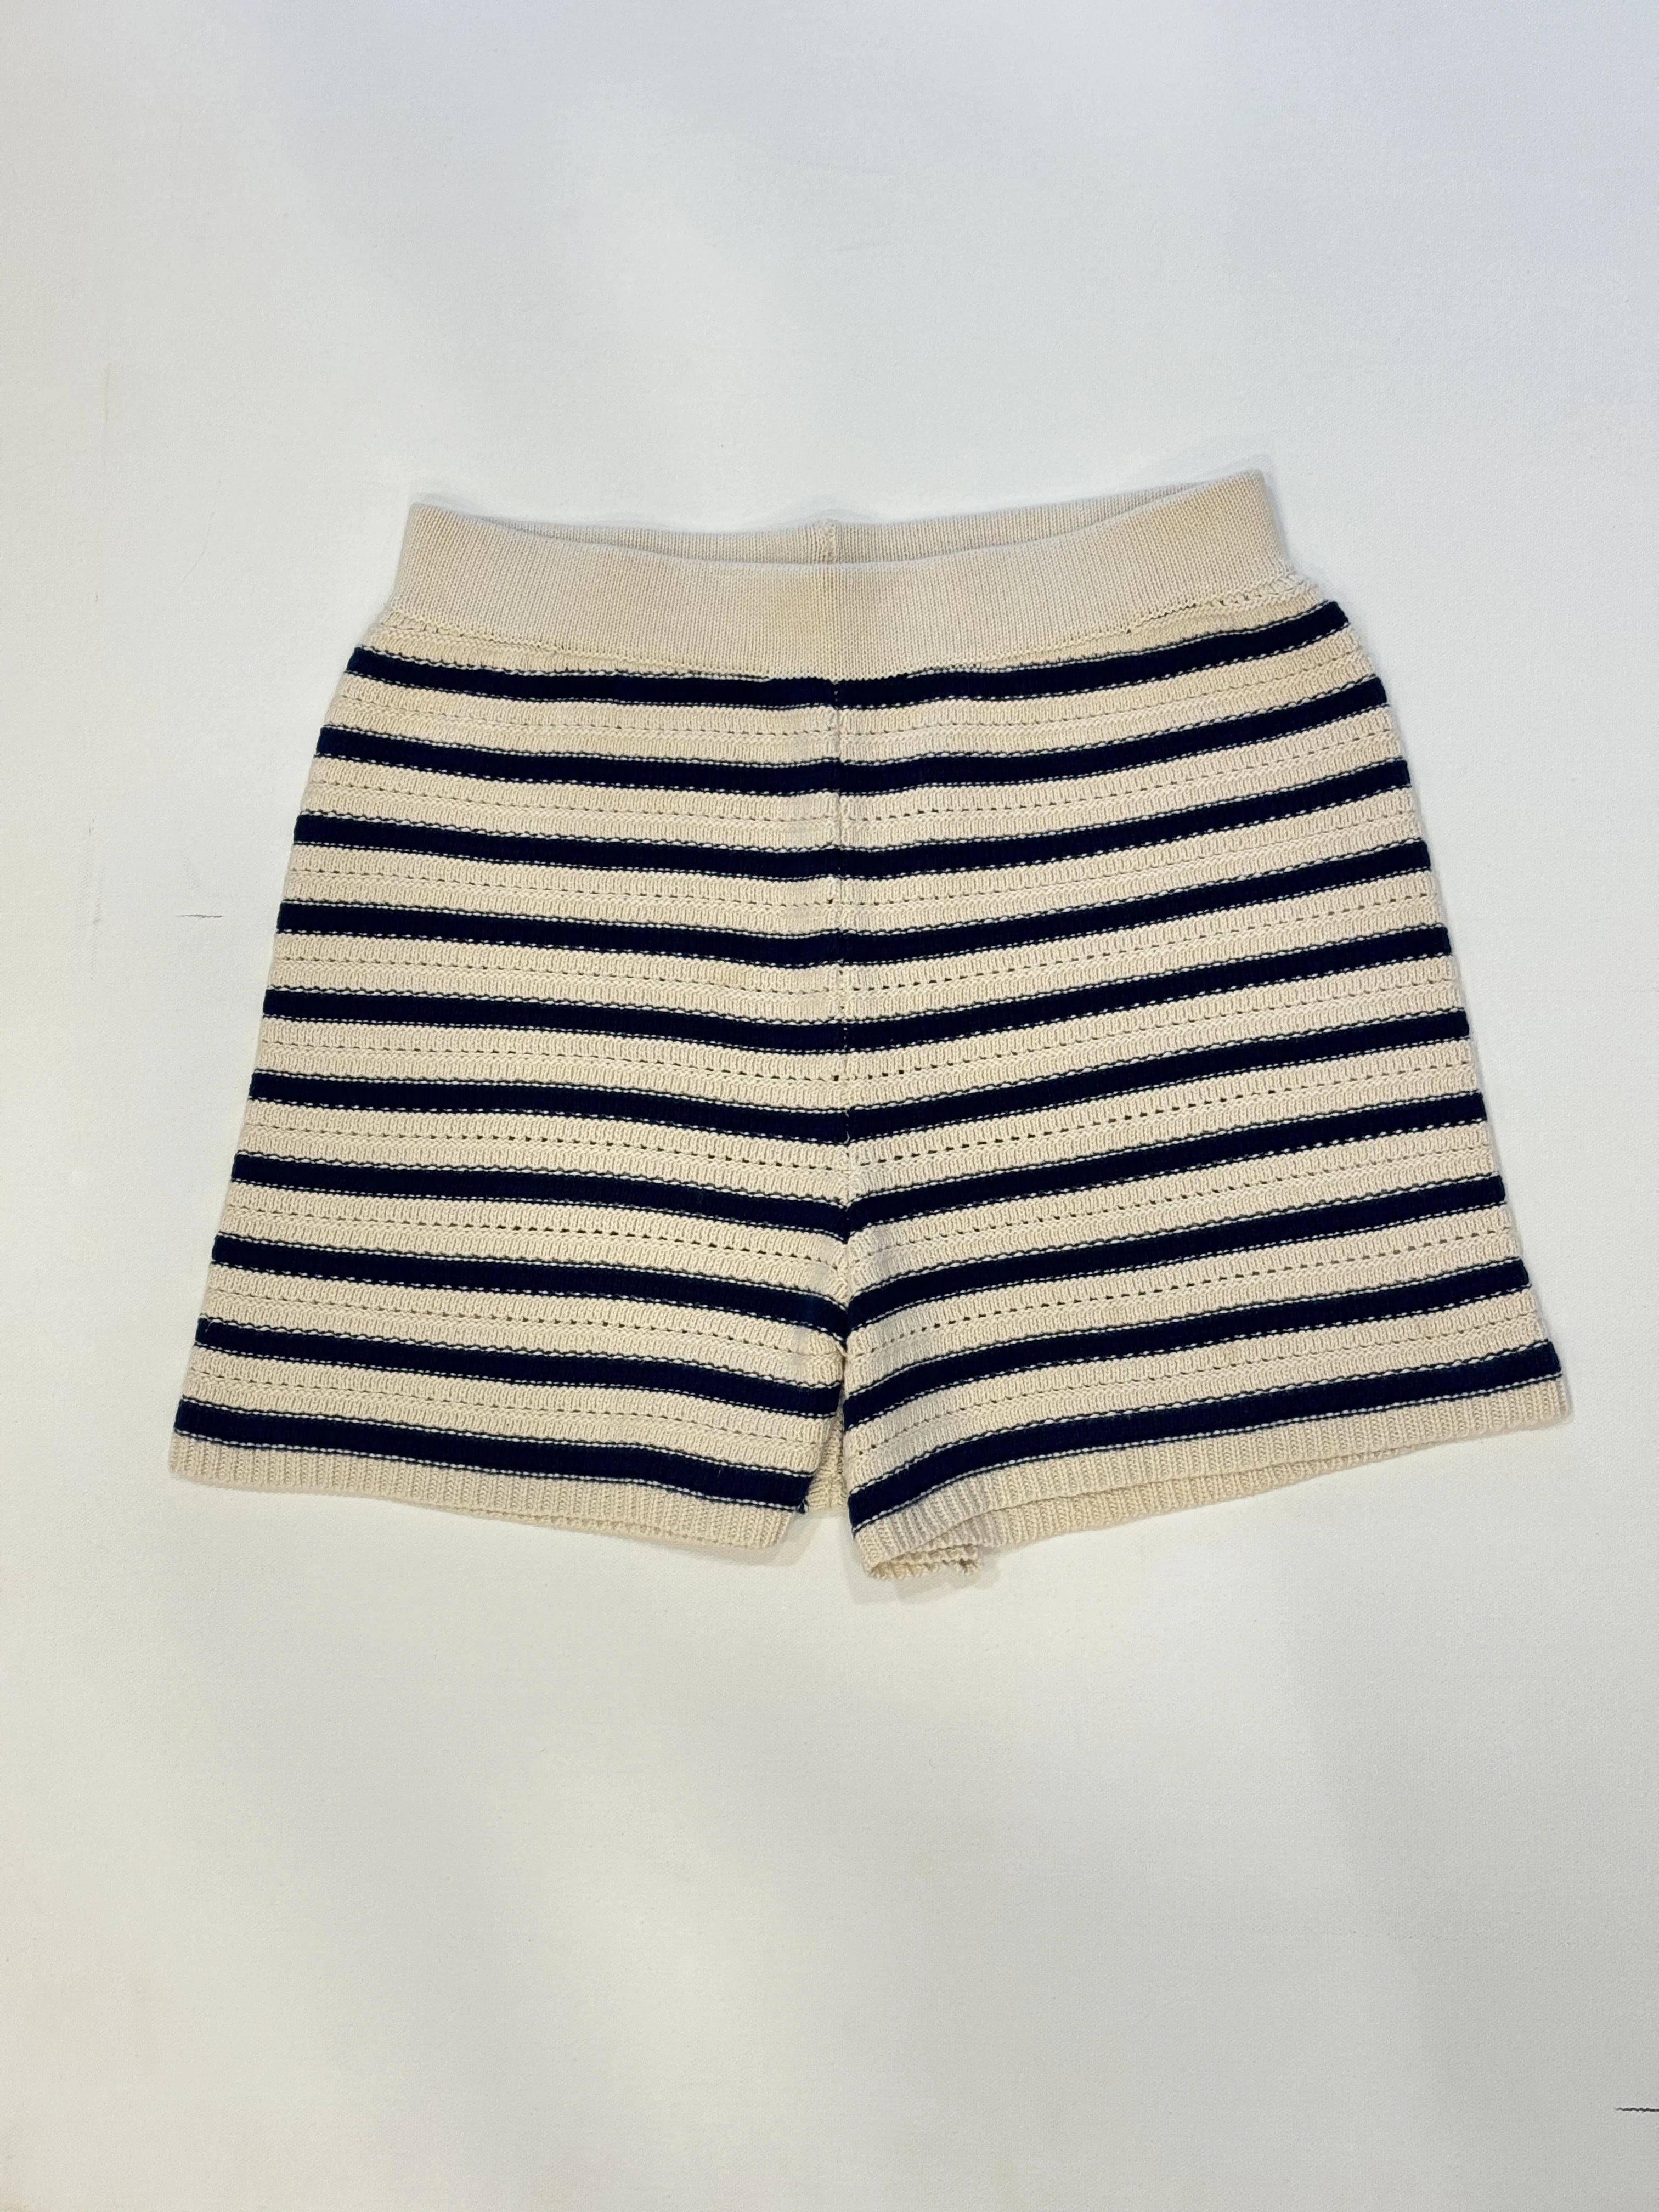 Lumi Mozart Crochet Shorts